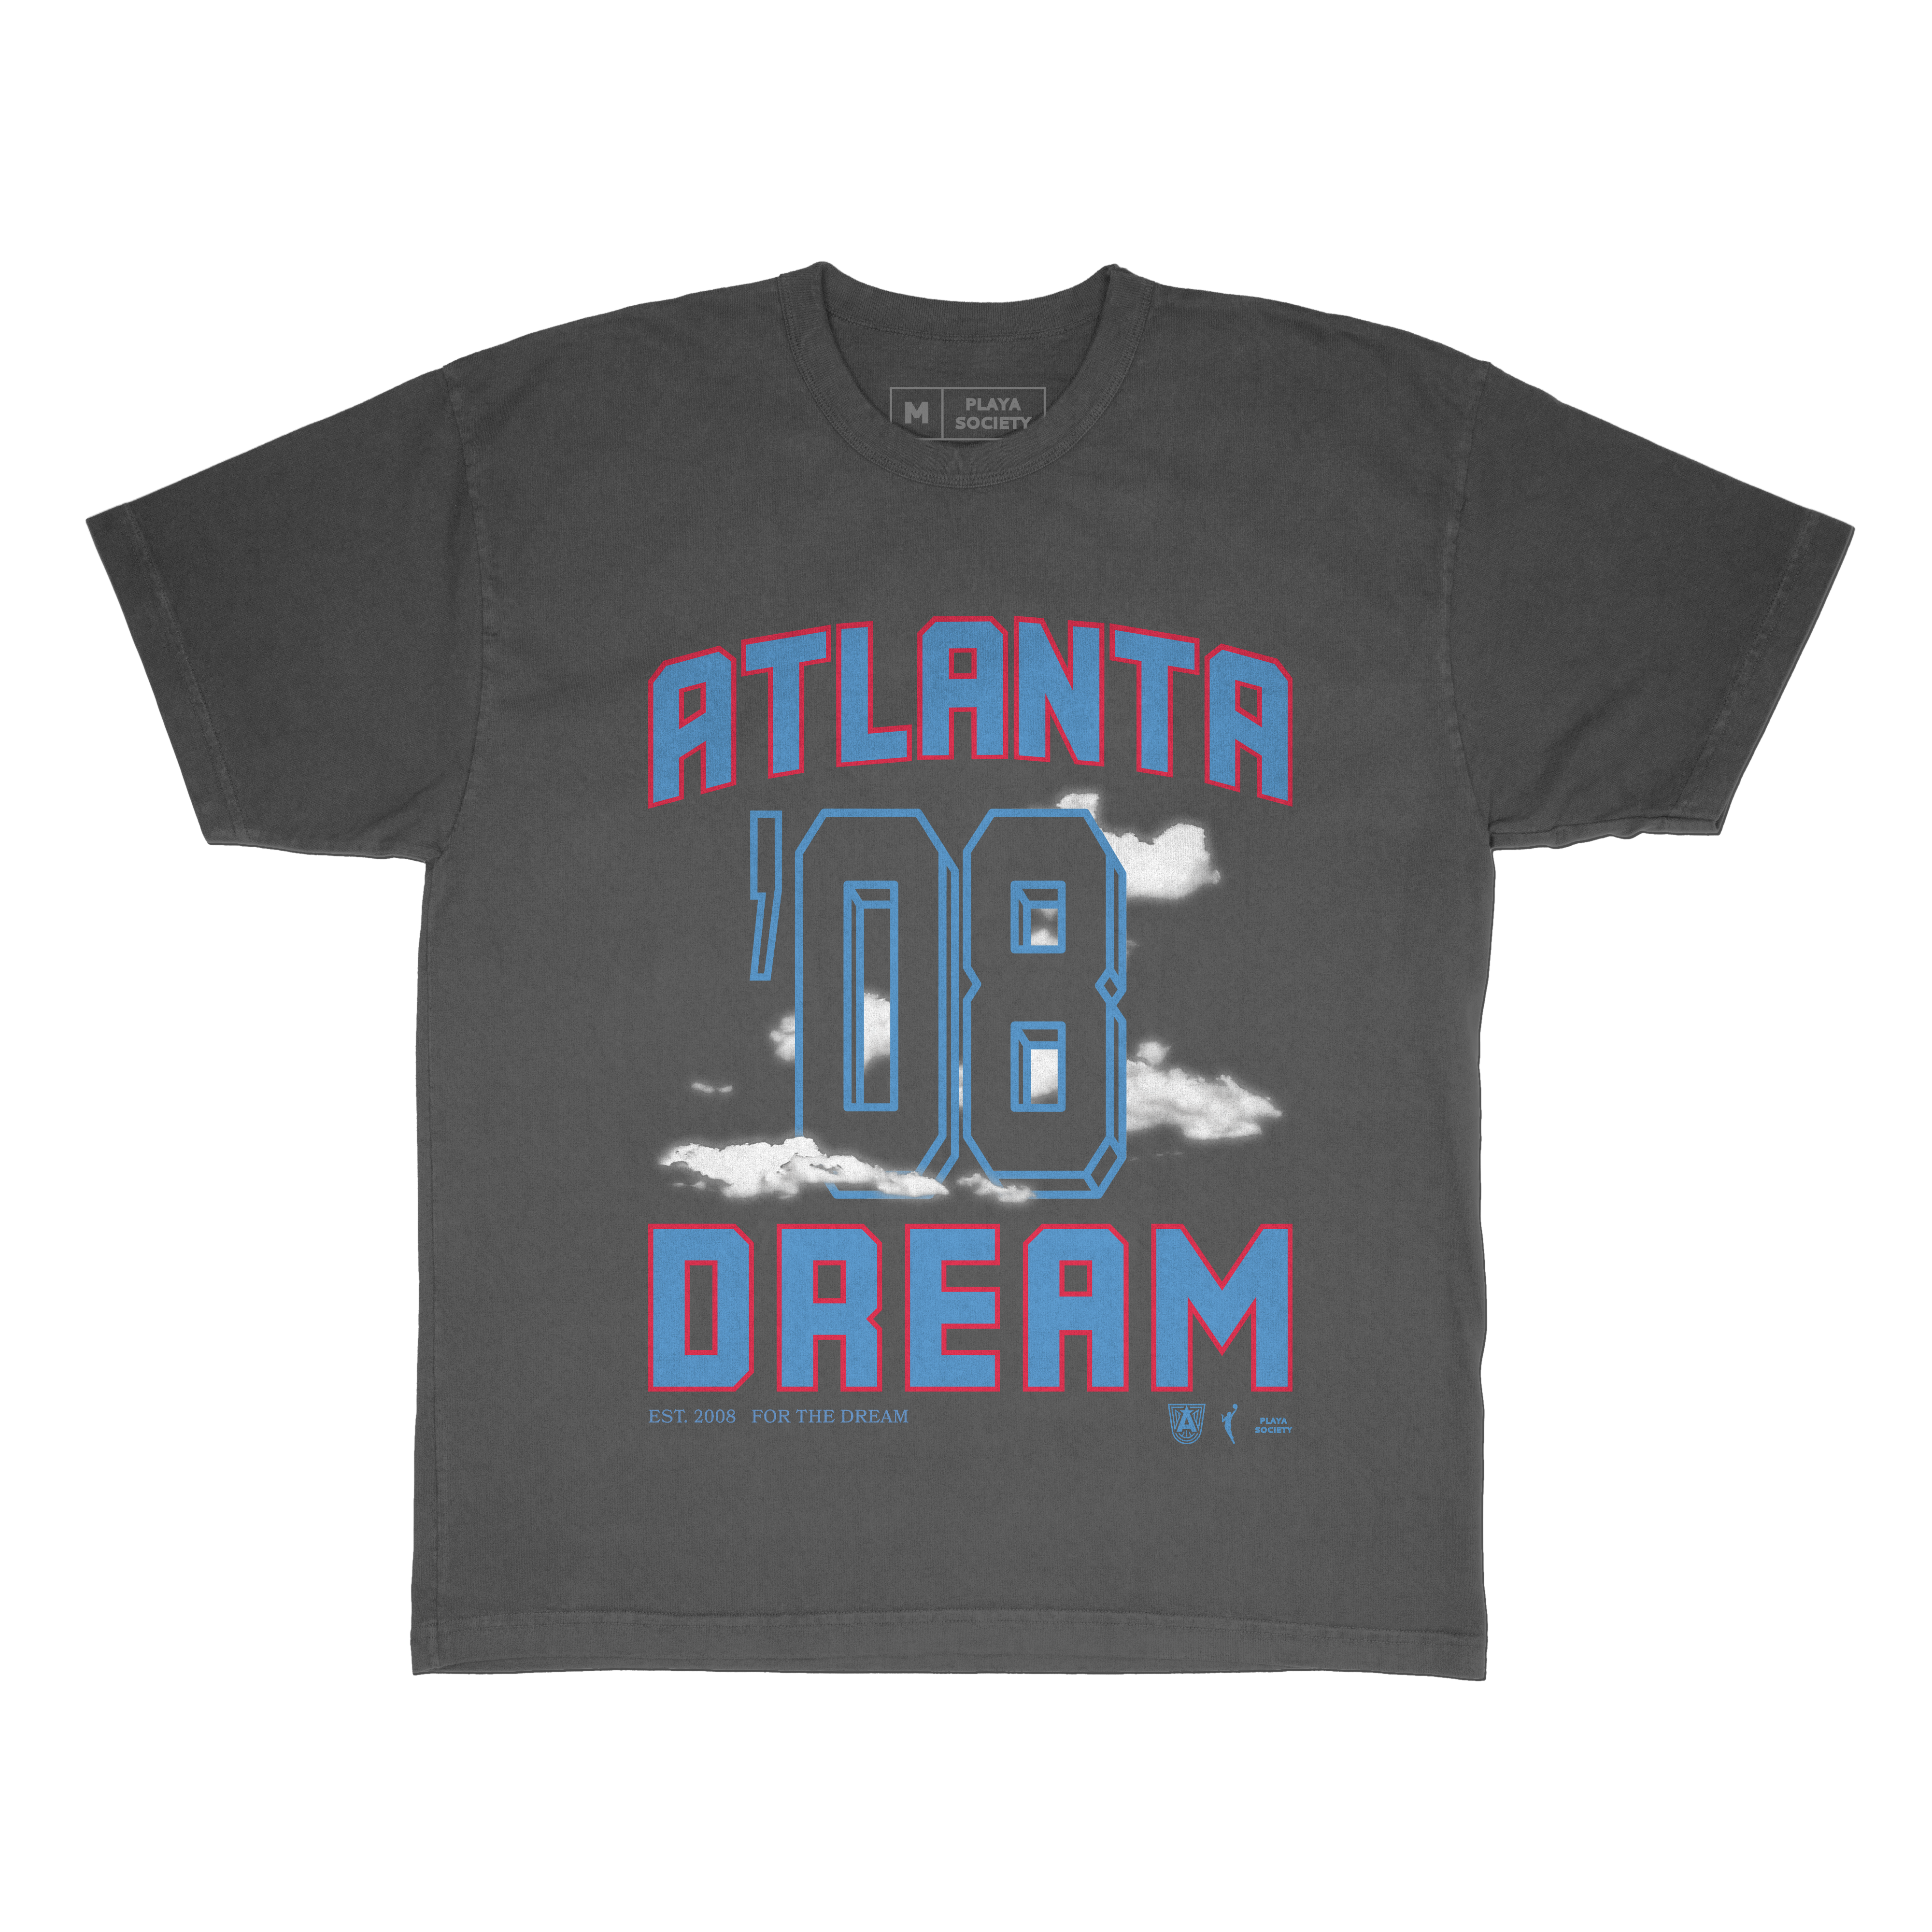 Atlanta Dream Gear, Dream Jerseys, Store, Pro Shop, Apparel